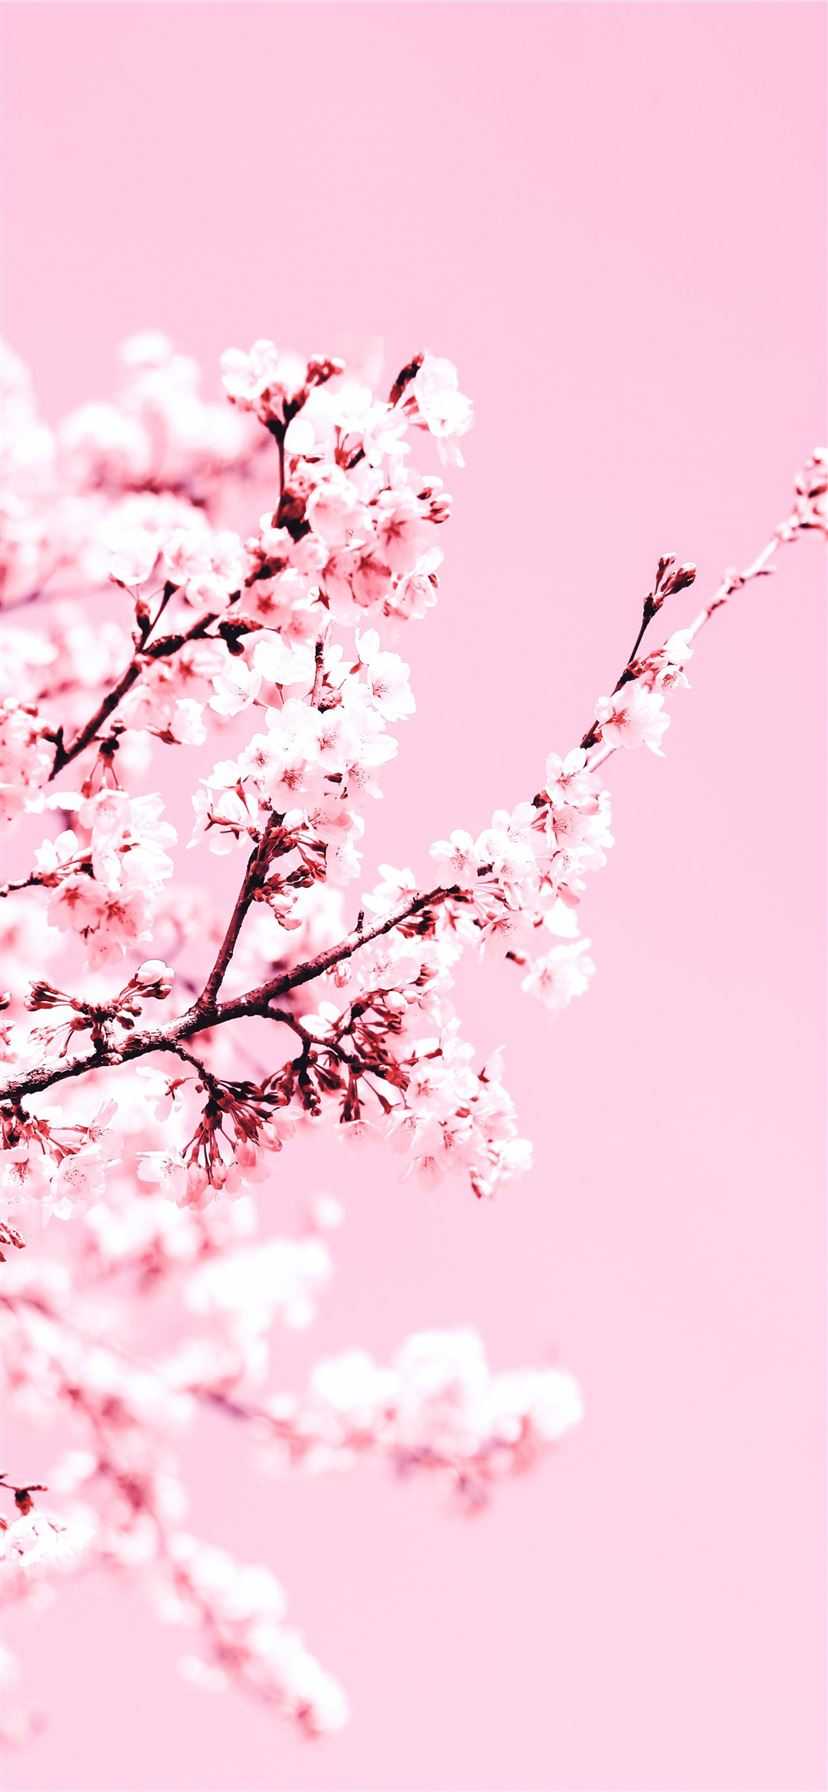 257 Cherry Blossom Wallpaper Anime Images, Stock Photos & Vectors |  Shutterstock